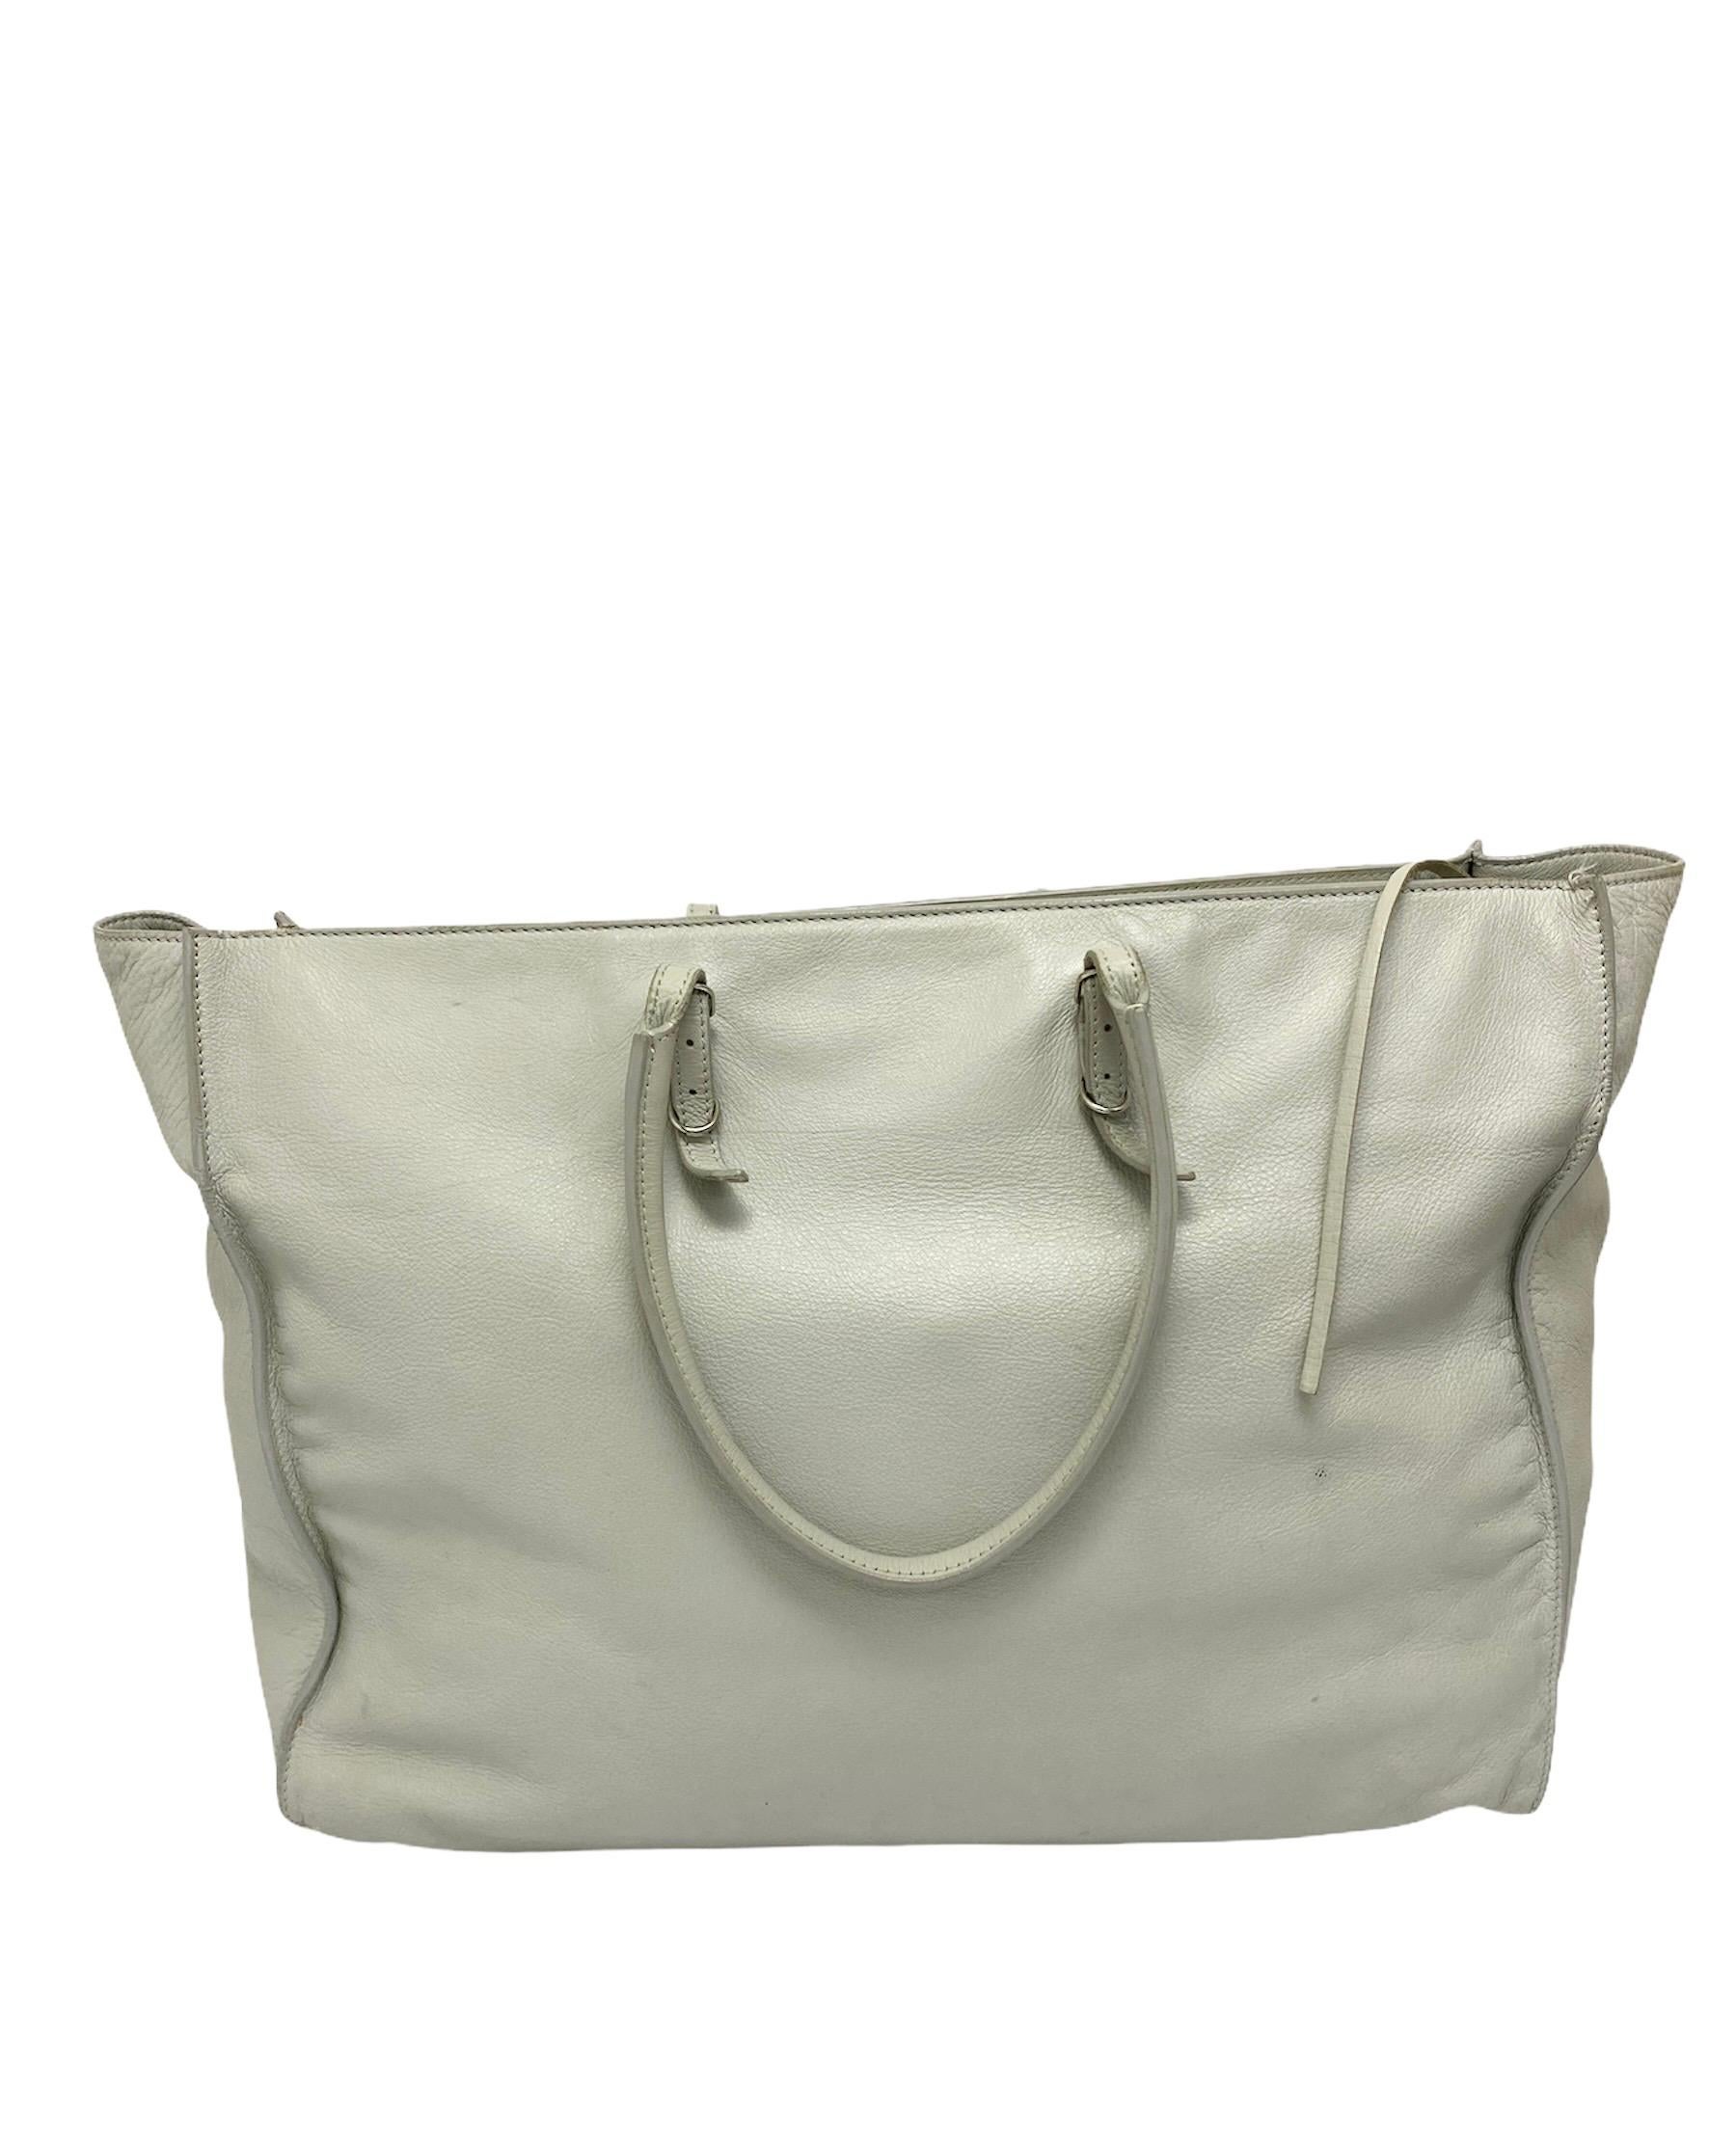 Balenciaga White Leather Papier Bag 2